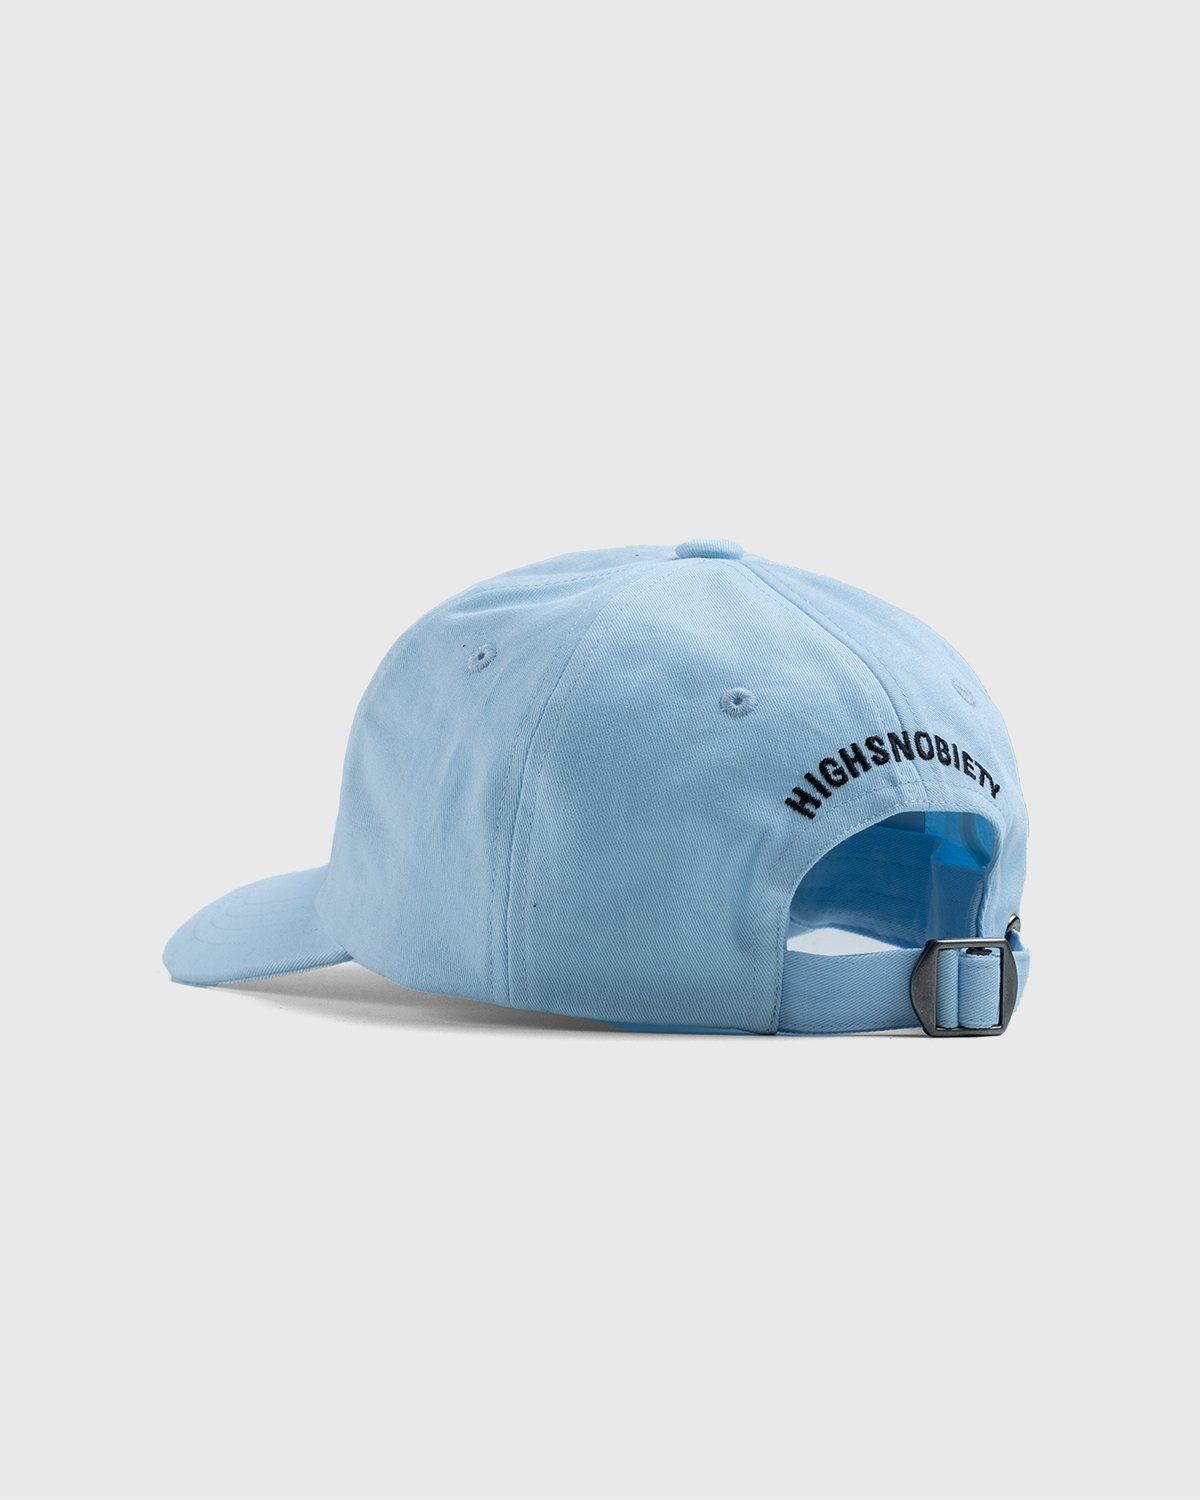 Highsnobiety – Berlin Berlin 2 Cap Blue - Hats - Blue - Image 2